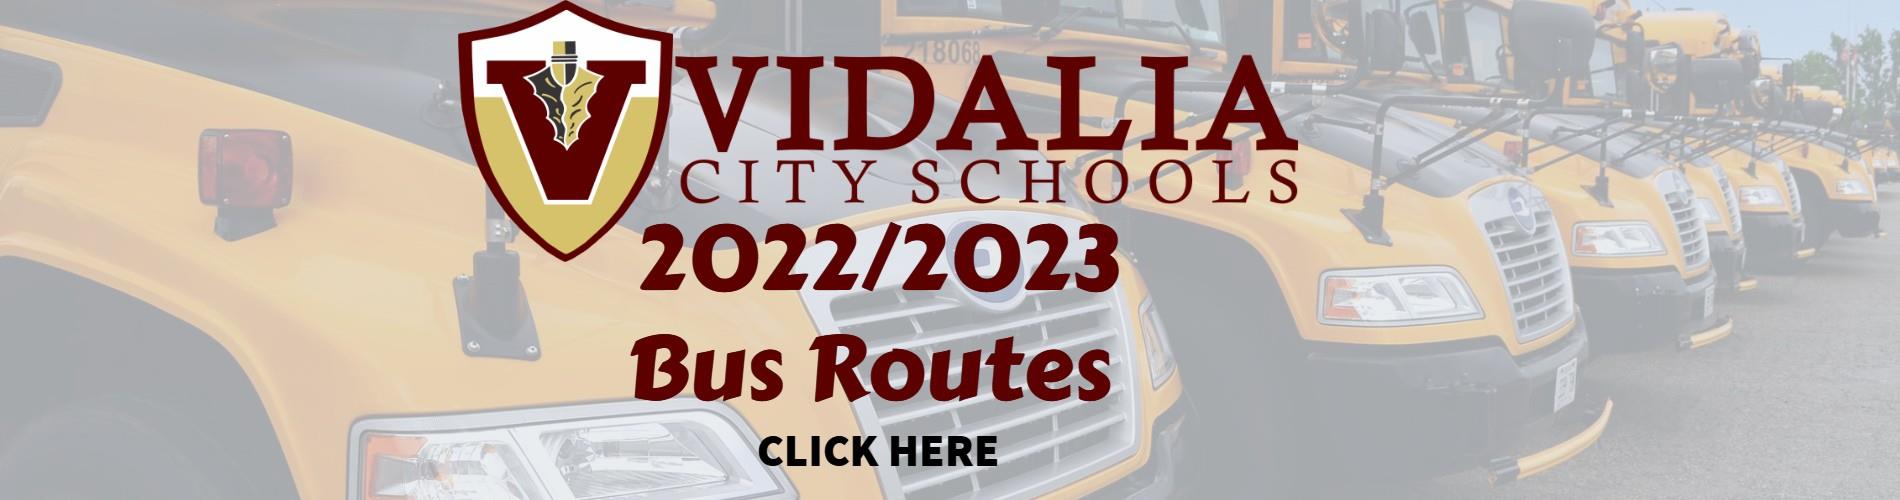 2022/23 School Bus Routes